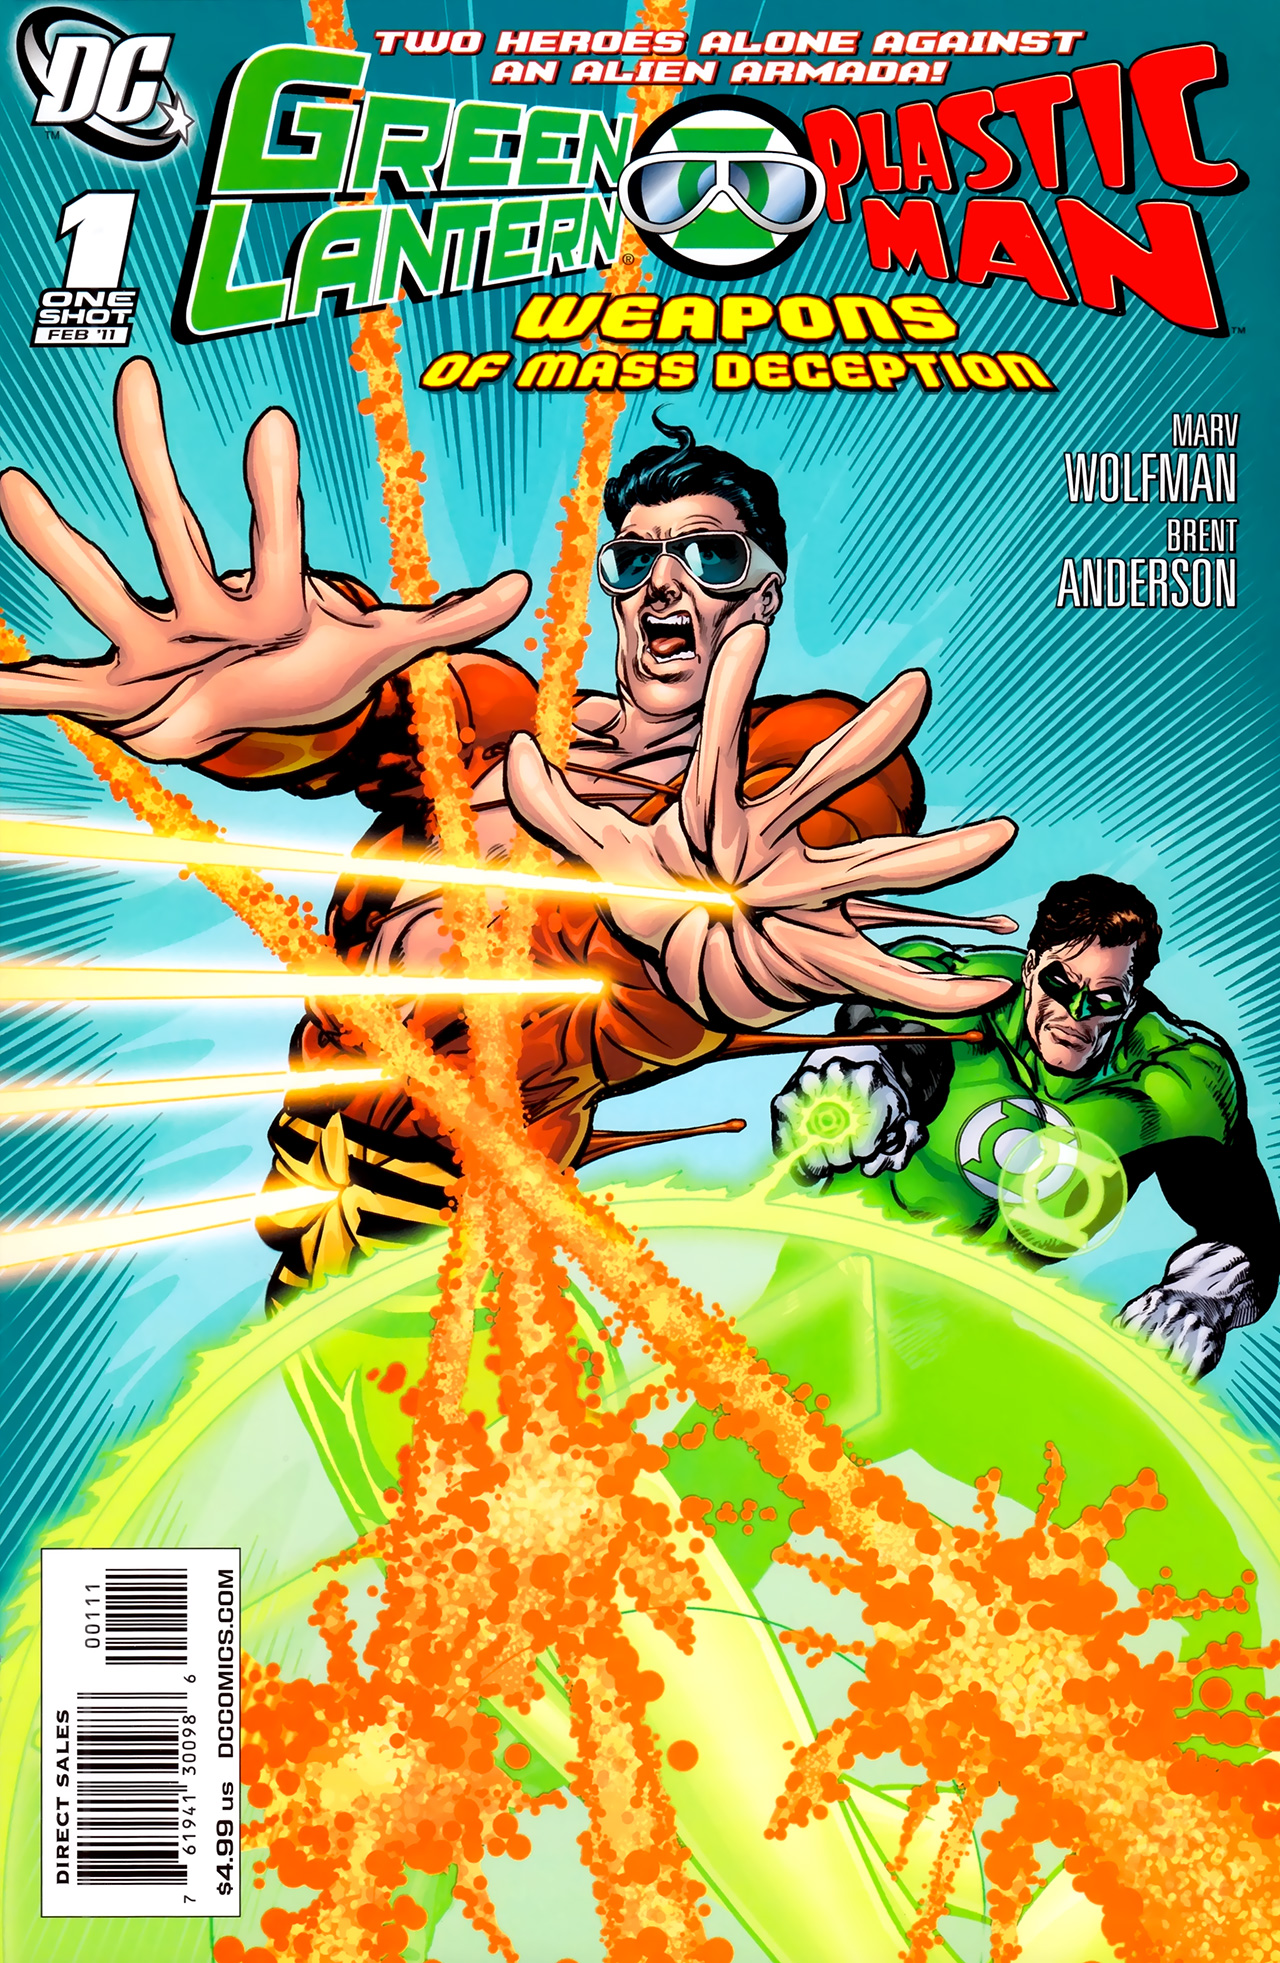 Read online Green Lantern/Plastic Man: Weapons of Mass Deception comic -  Issue # Full - 1